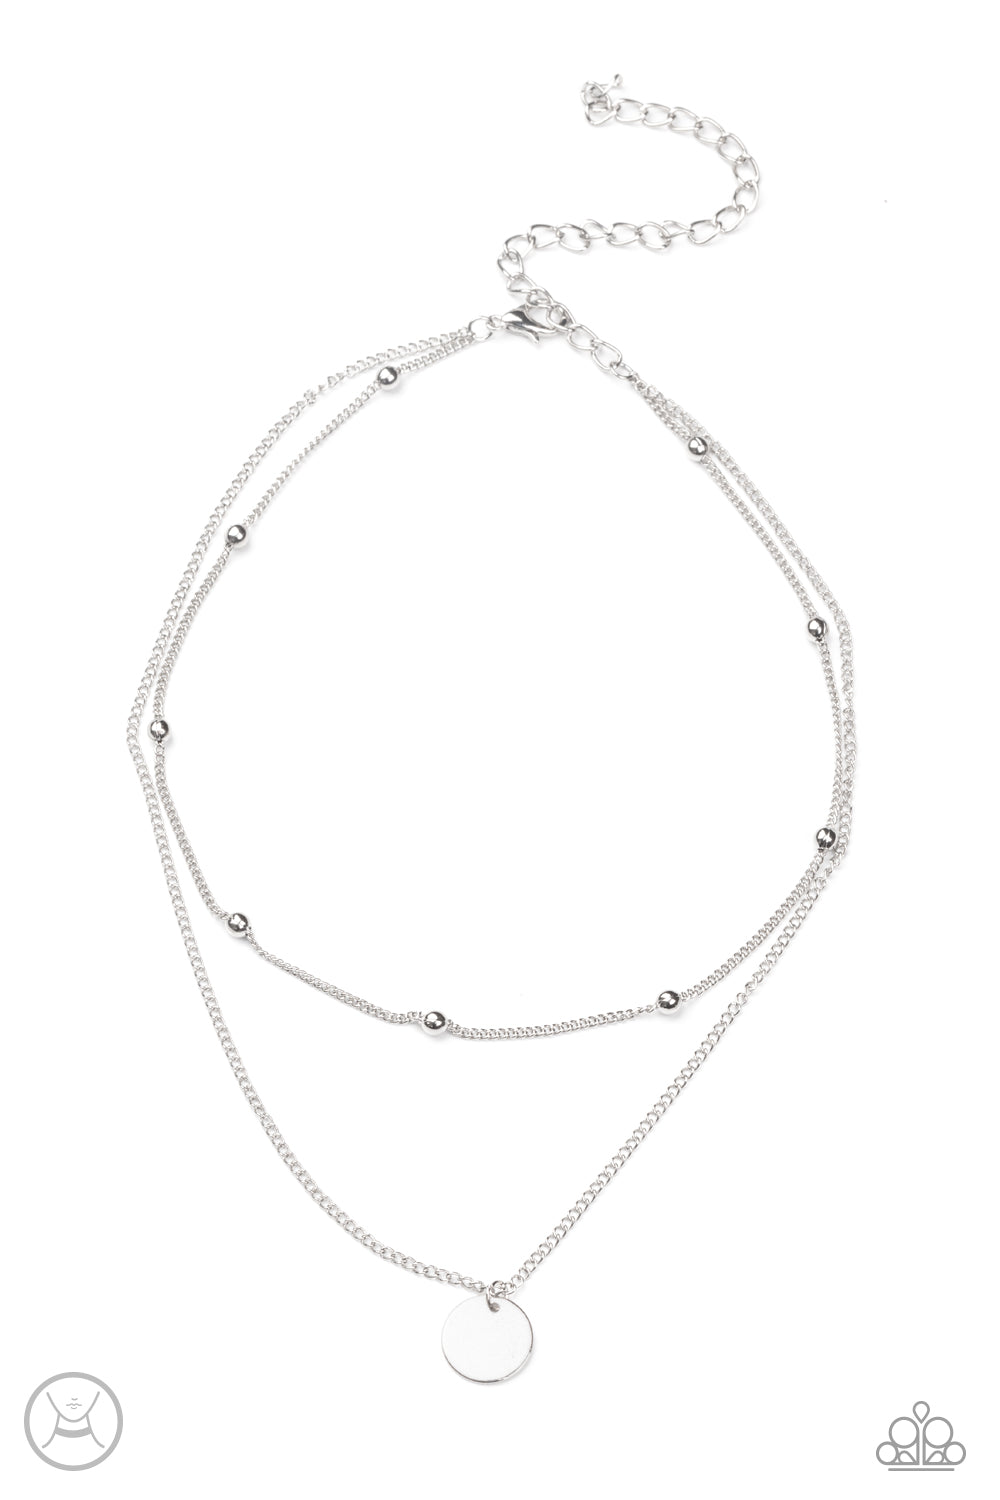 Paparazzi Necklace - Modestly Minimalist - Silver